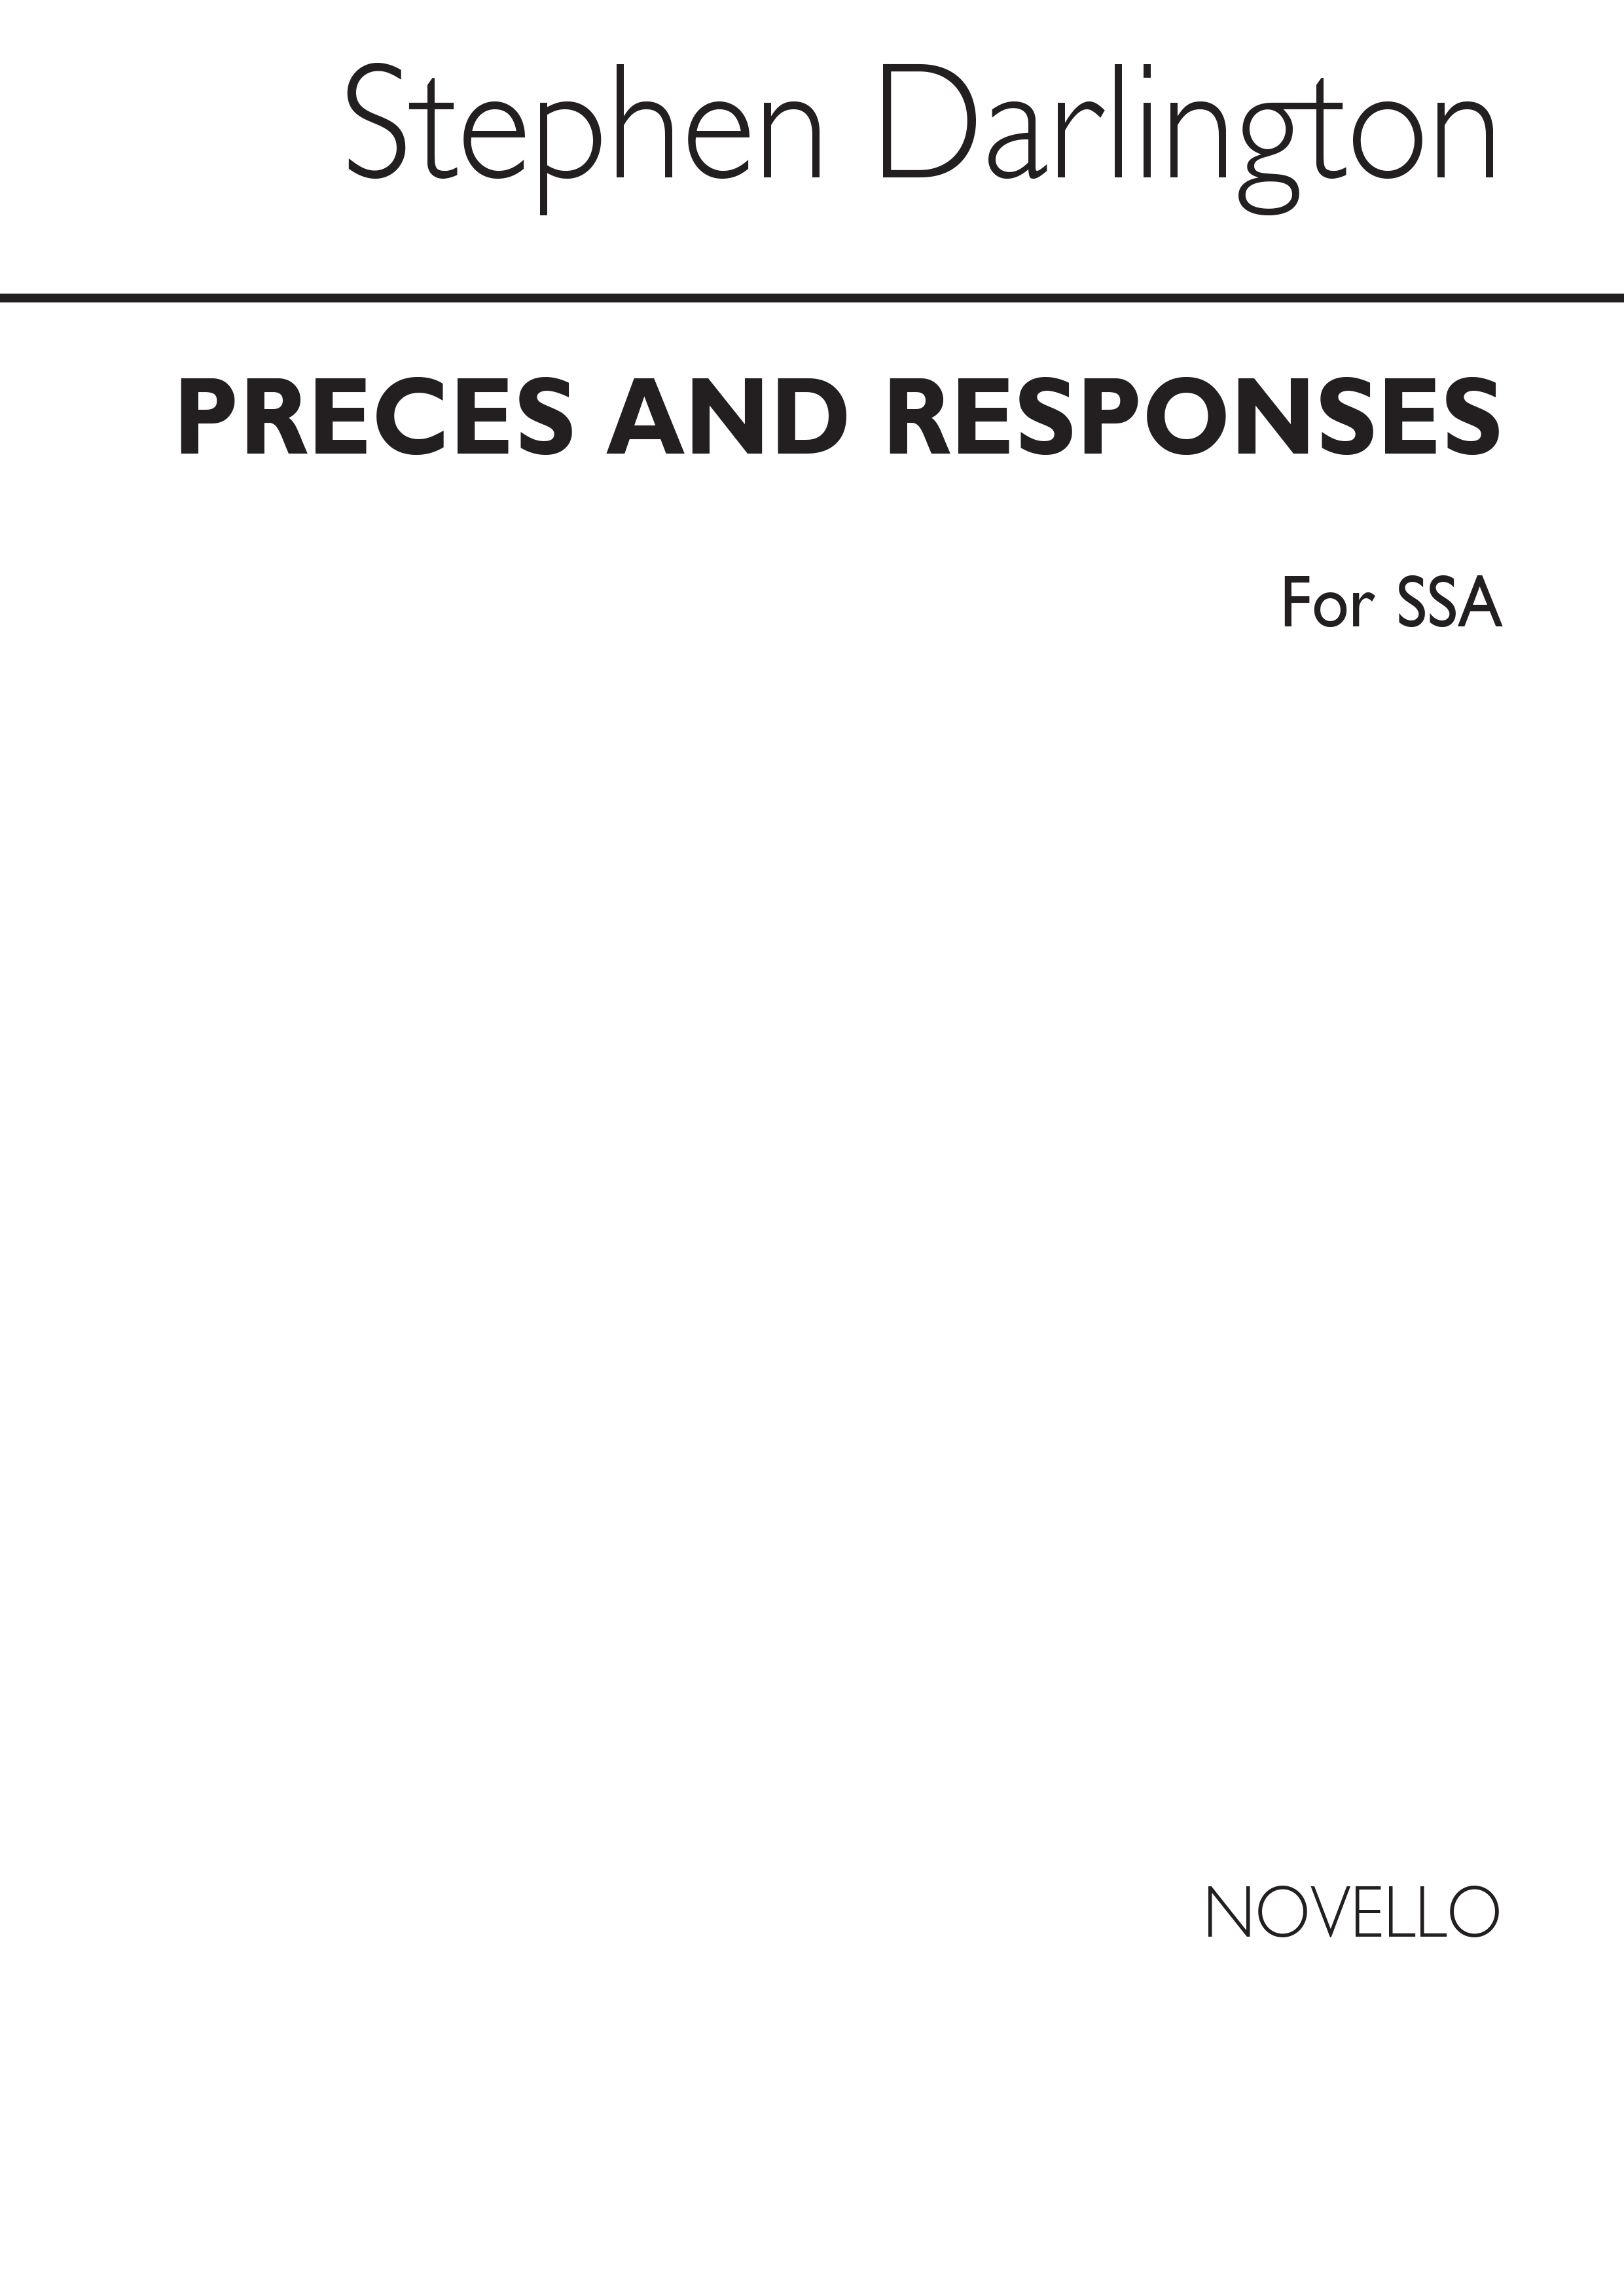 Stephen Darlington: Preces And Responses-SSA